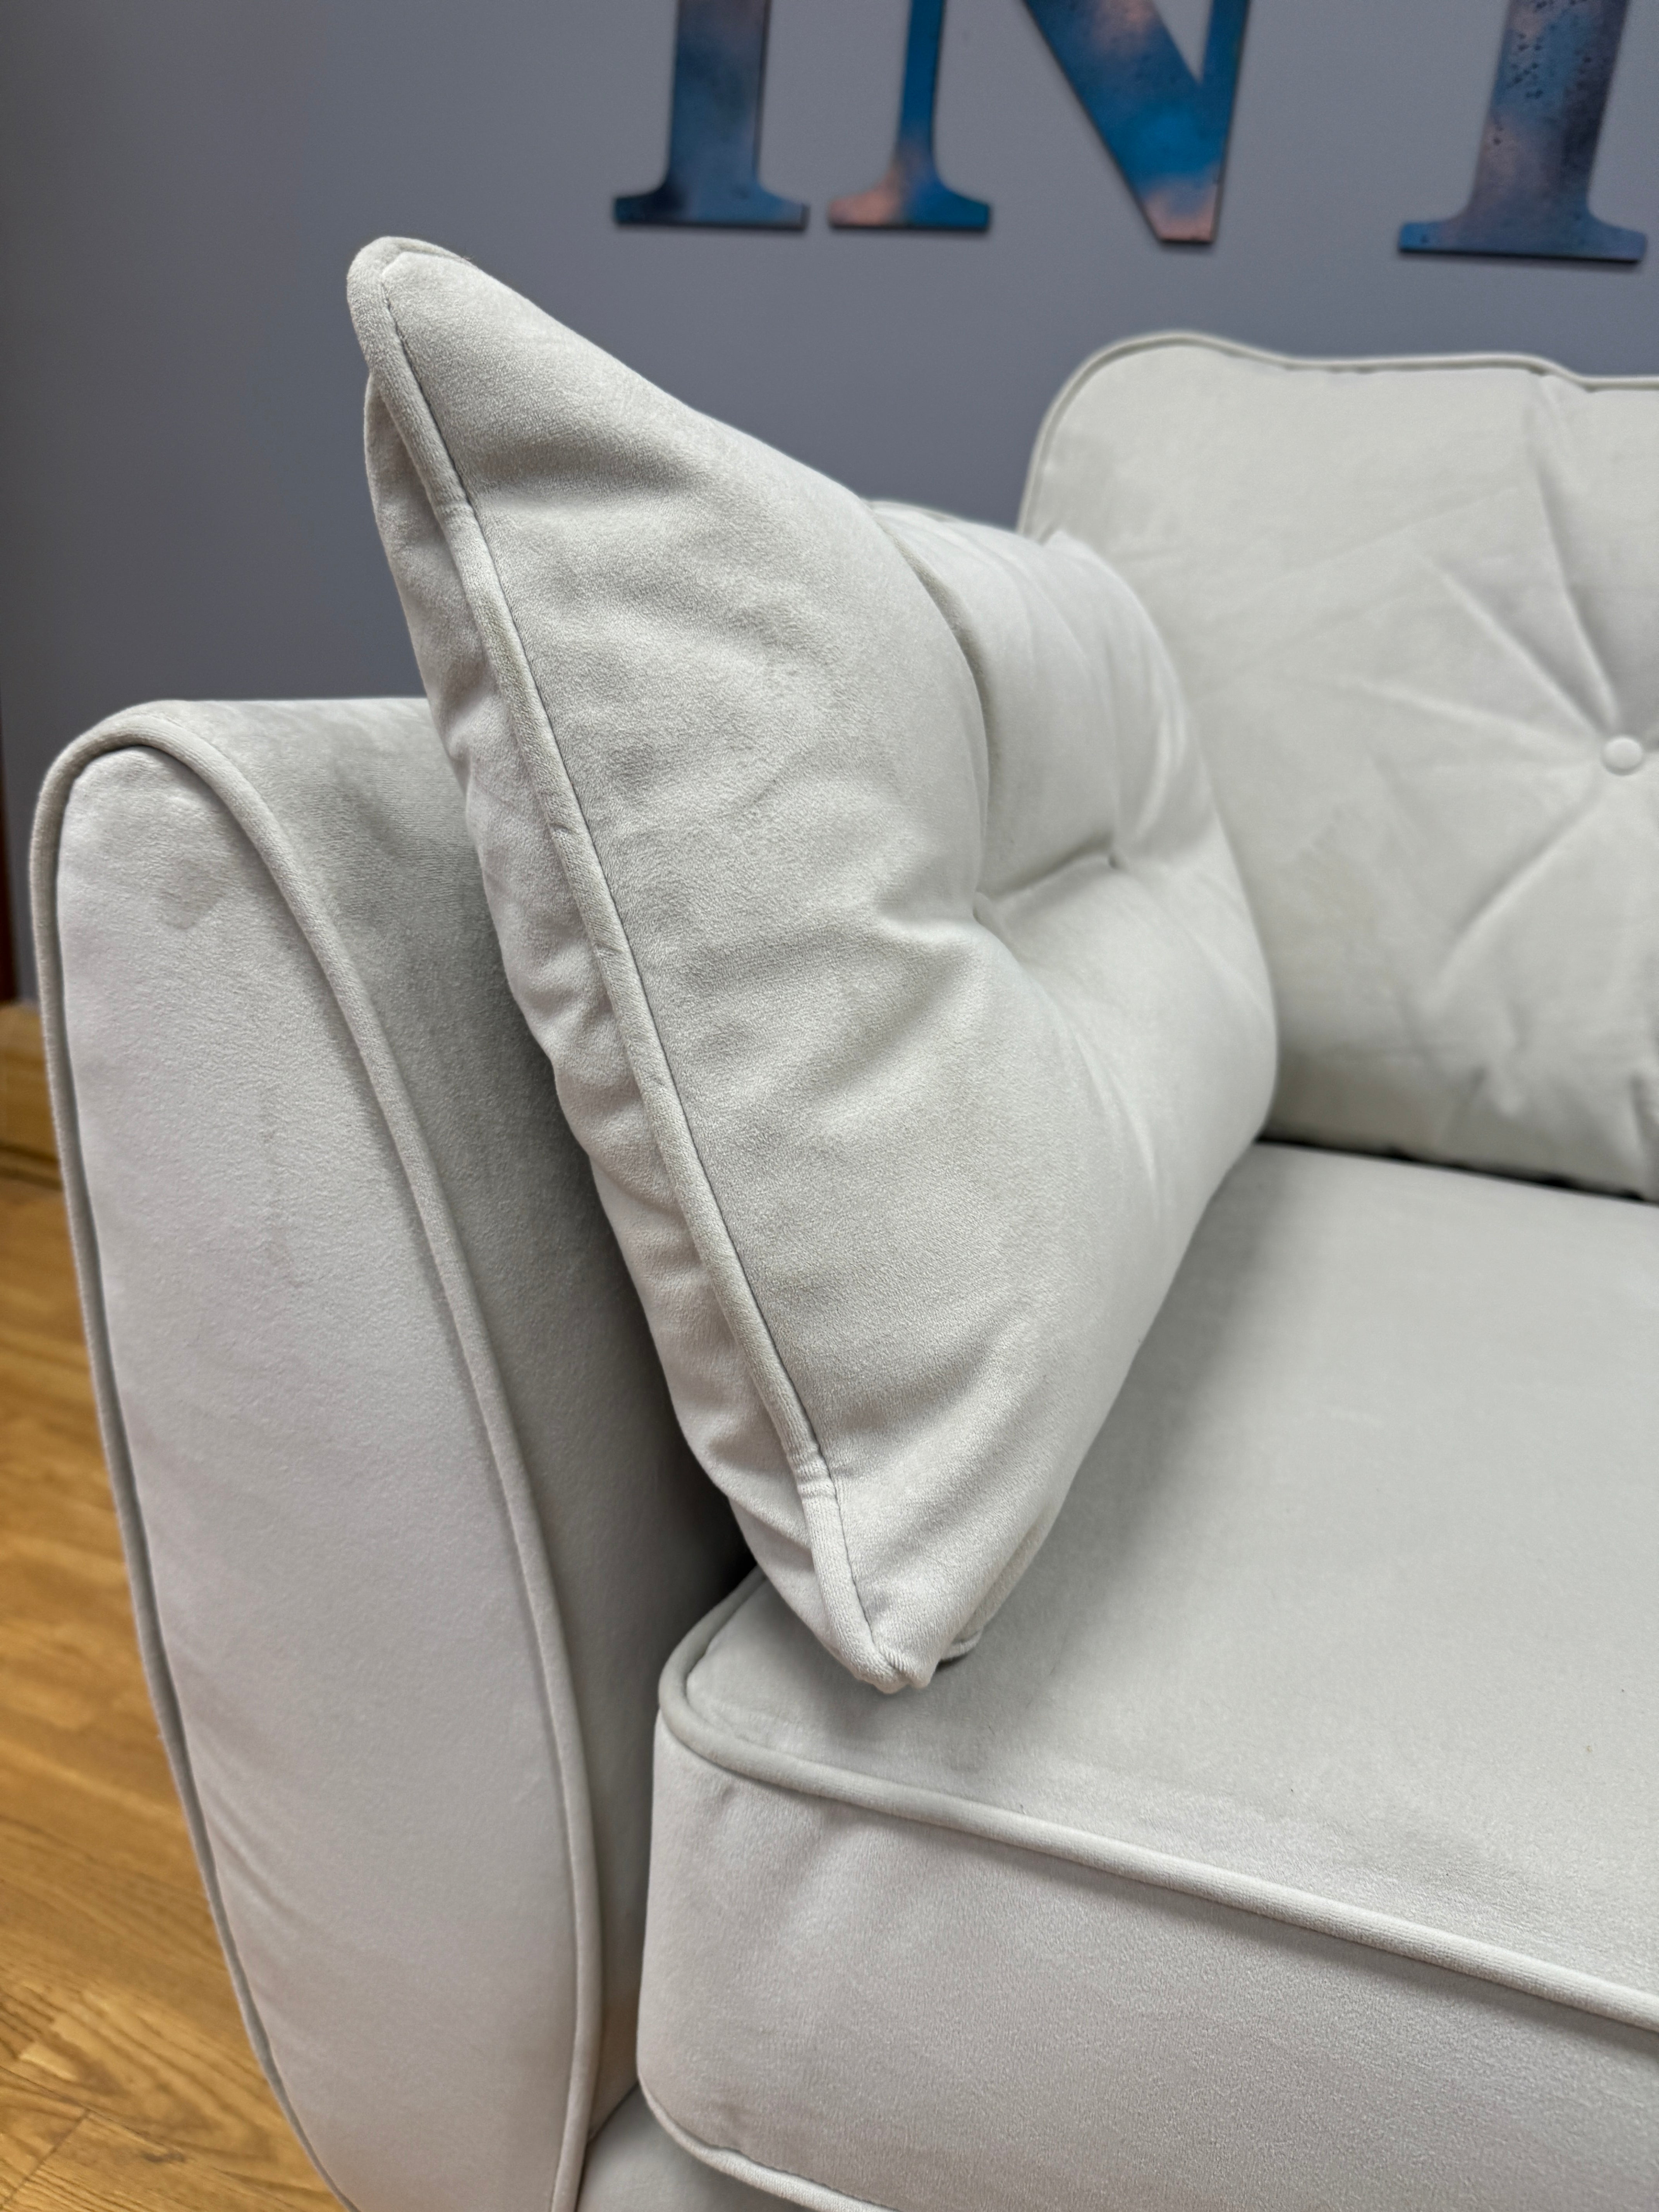 WHITE LABEL ZINC medium 3 seater standard back sofa in Stone light grey velvet fabric